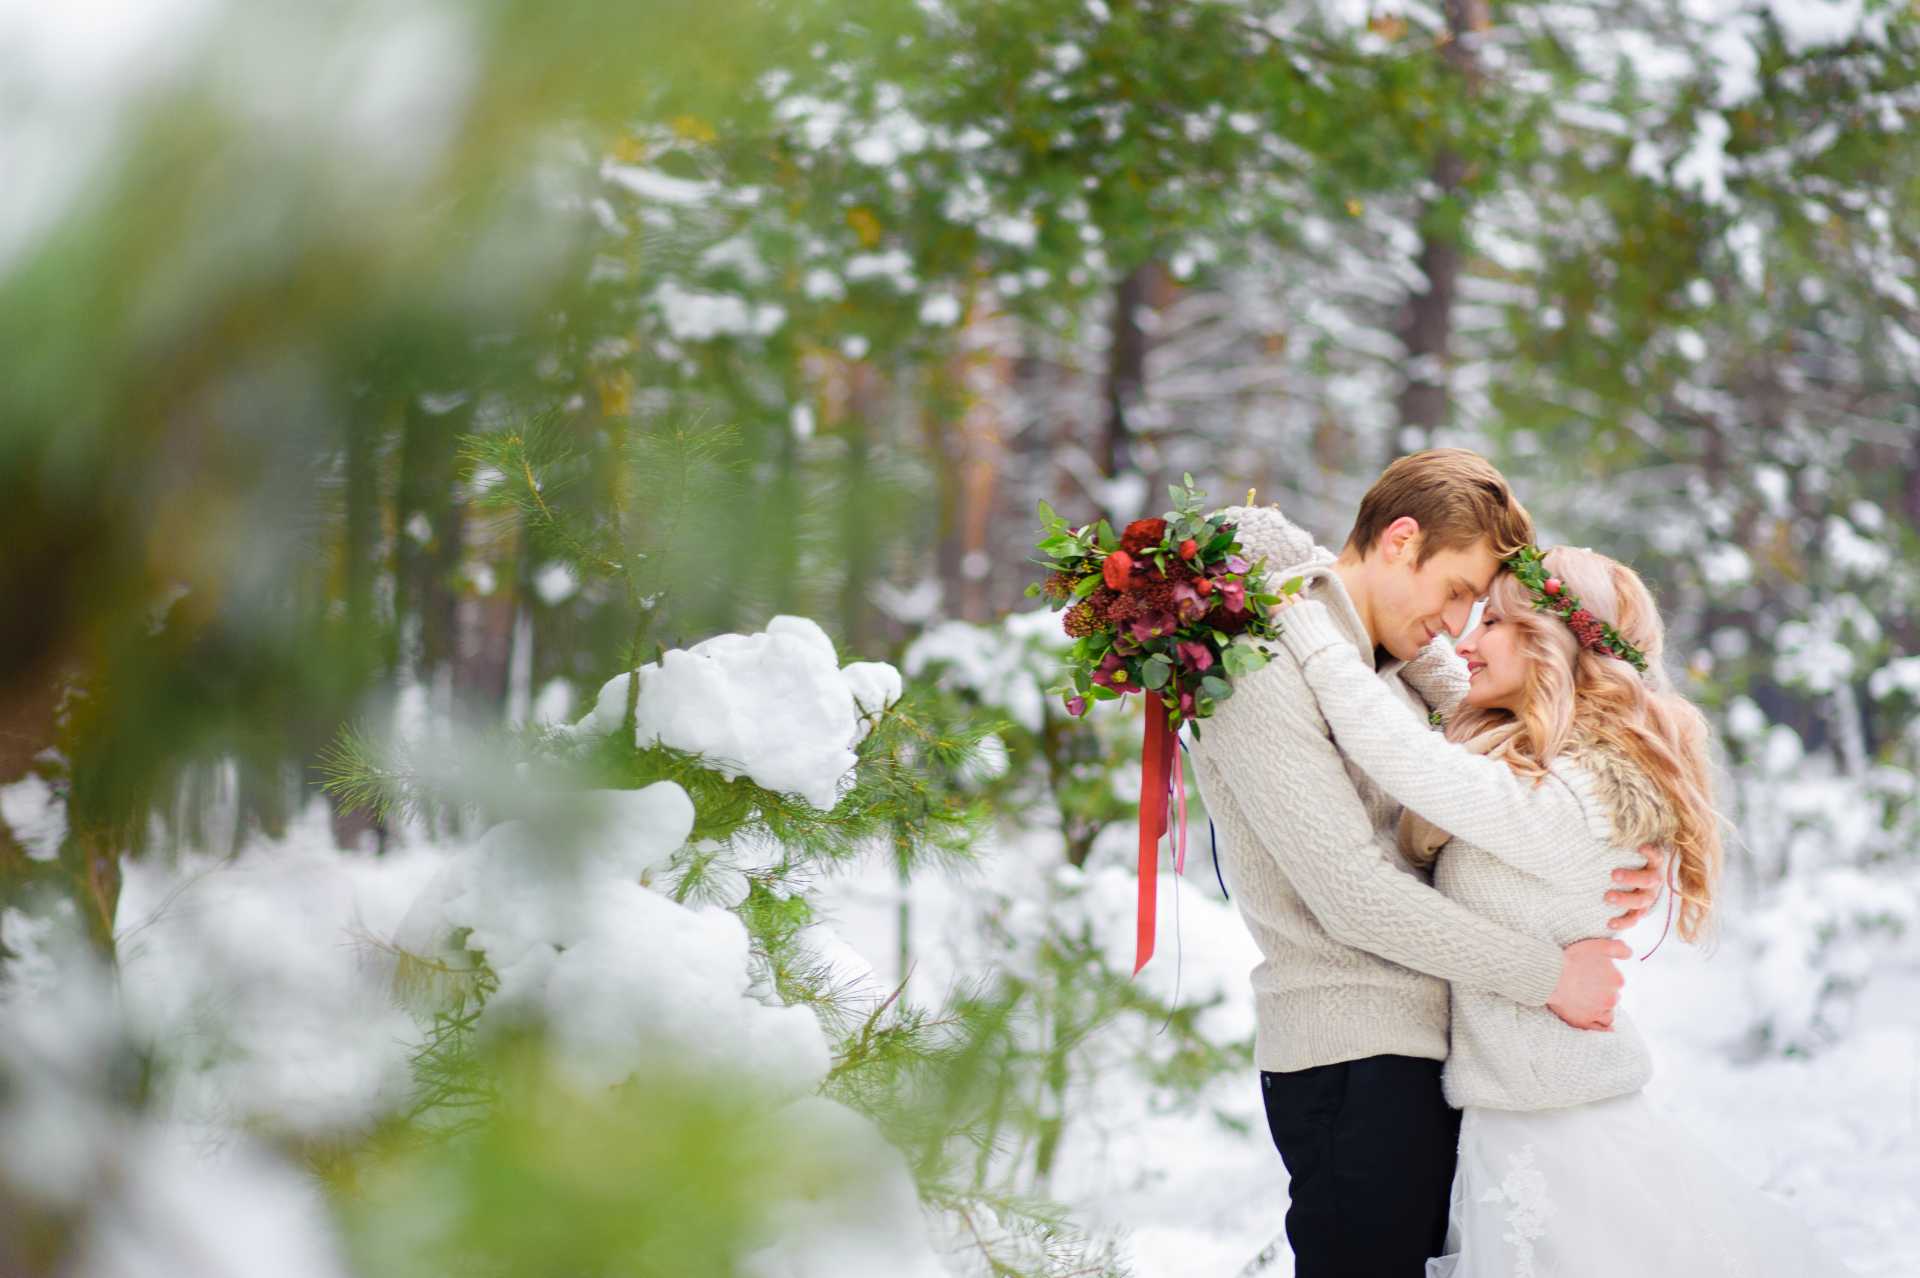 Kenwood Hall Hotel & Spa Winter Weddings offers 23-24